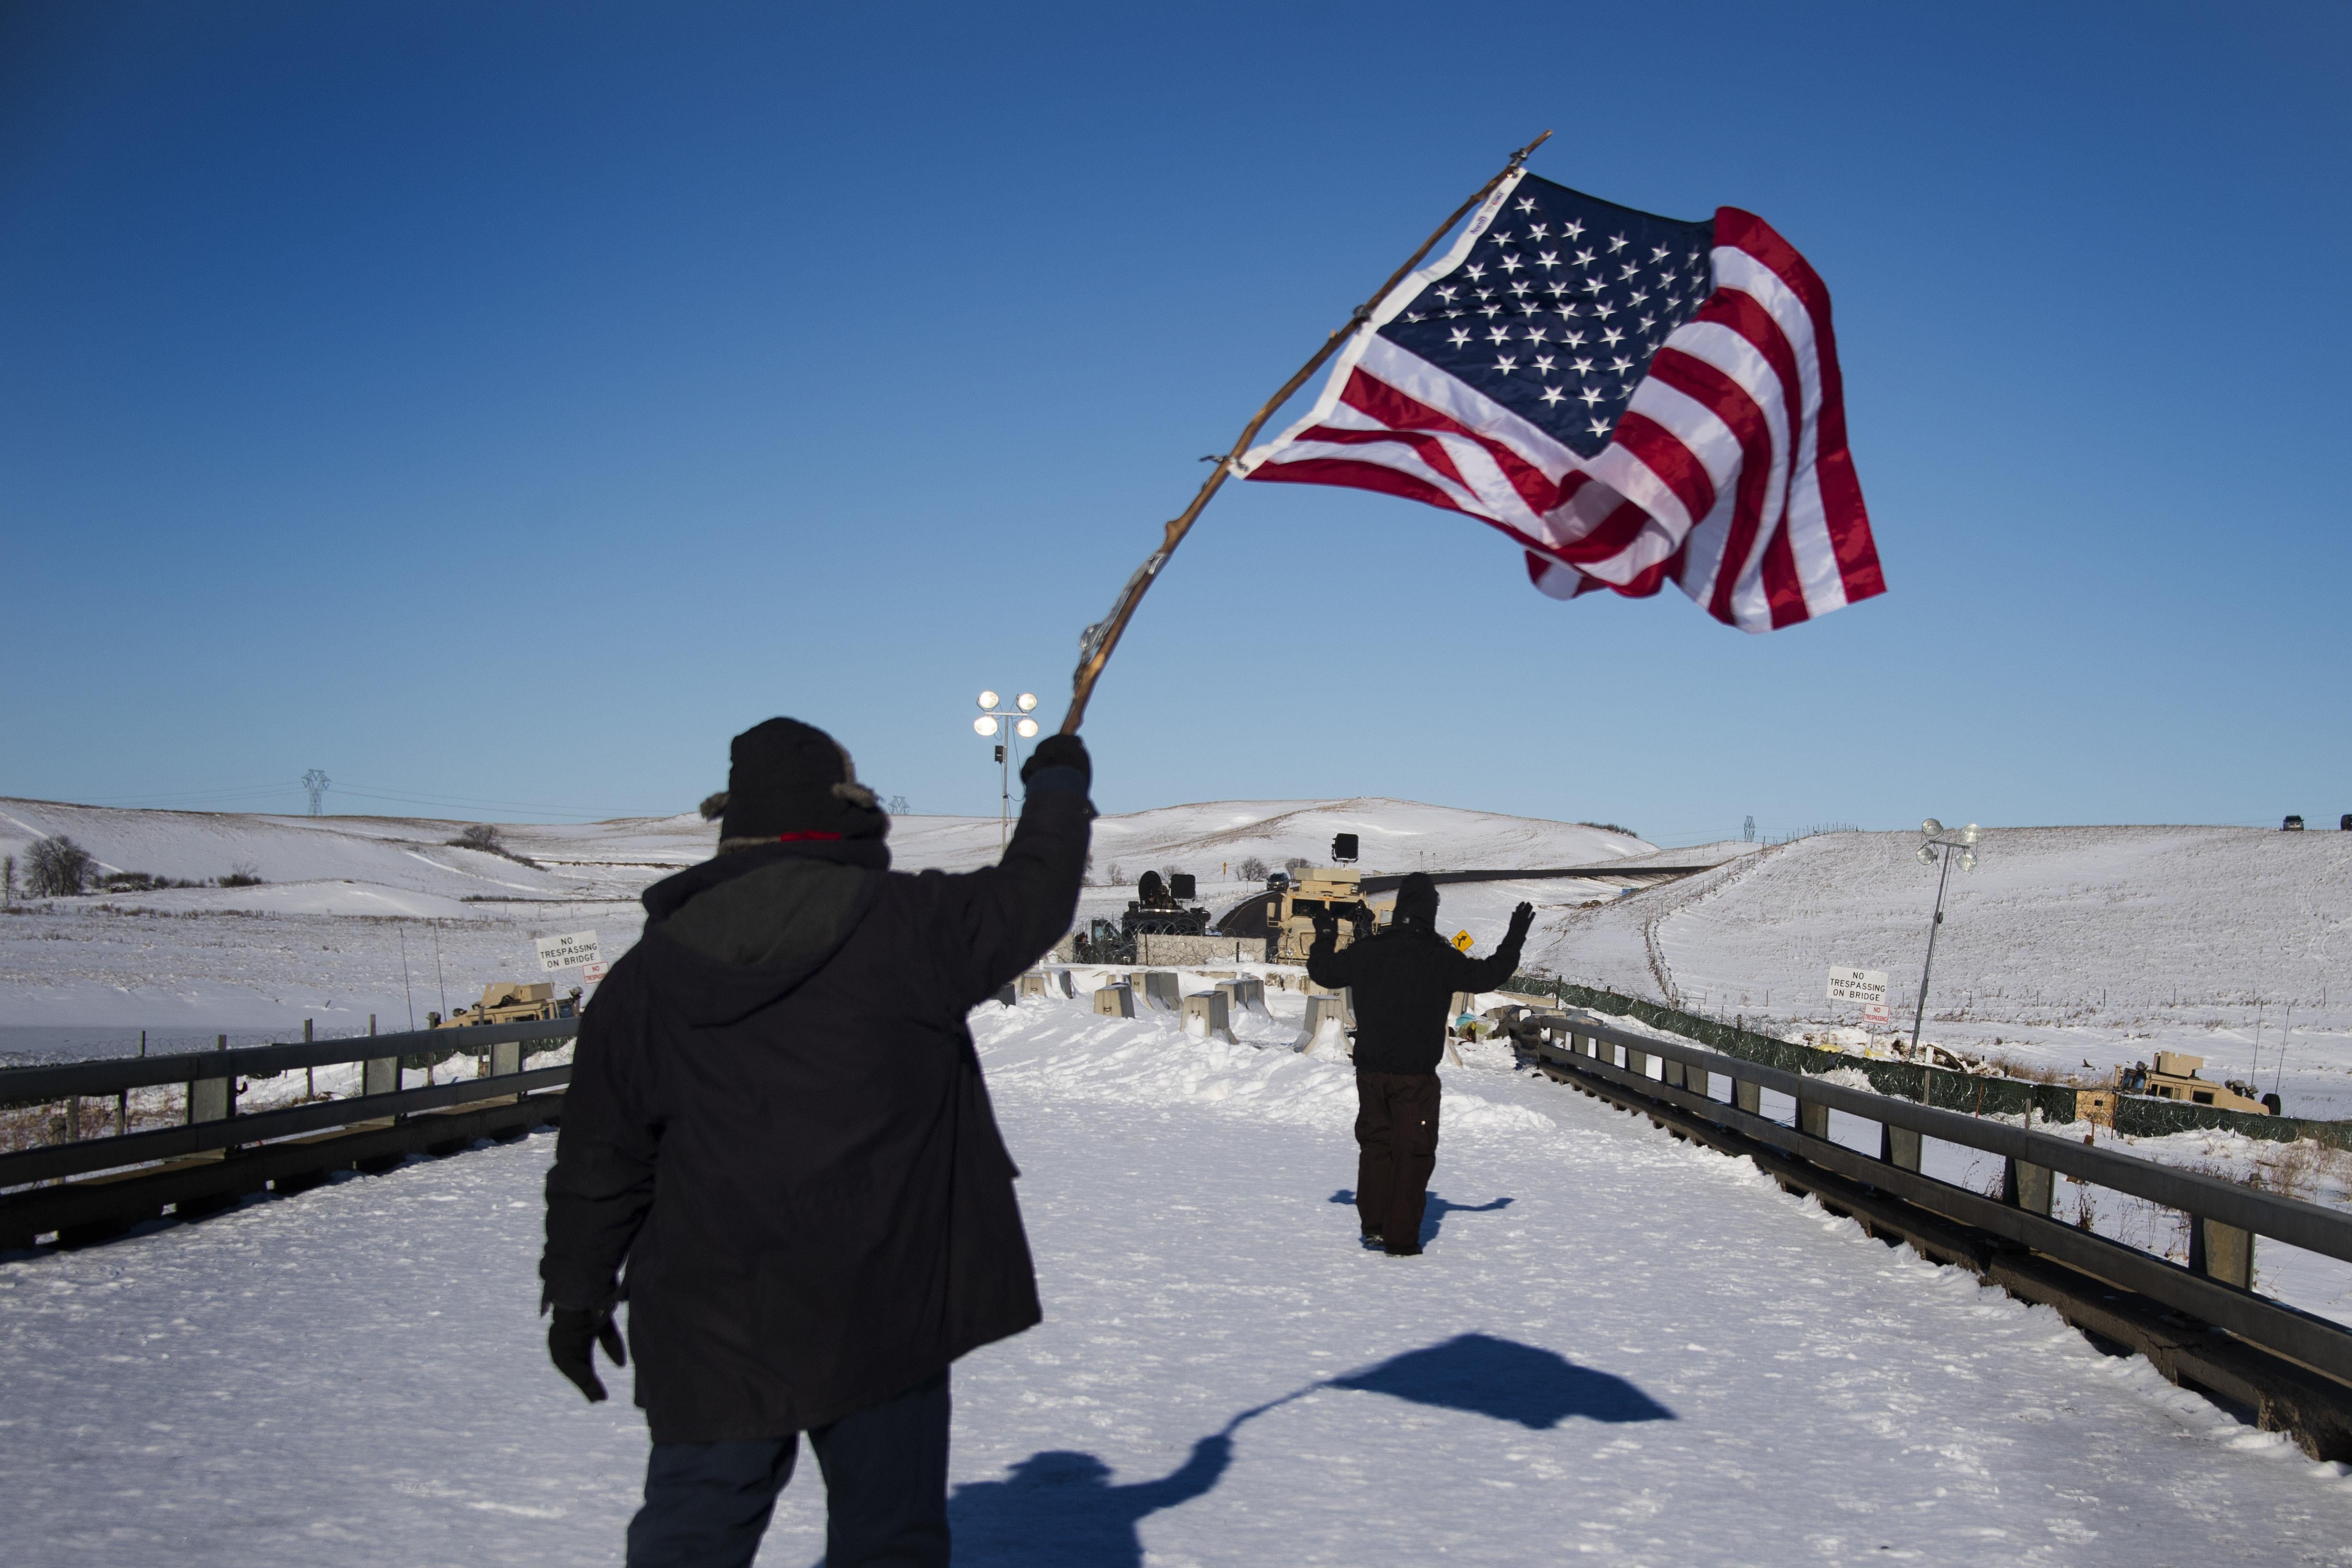 A man waves a U.S. flag as another man with arms raised walks toward a barricade.